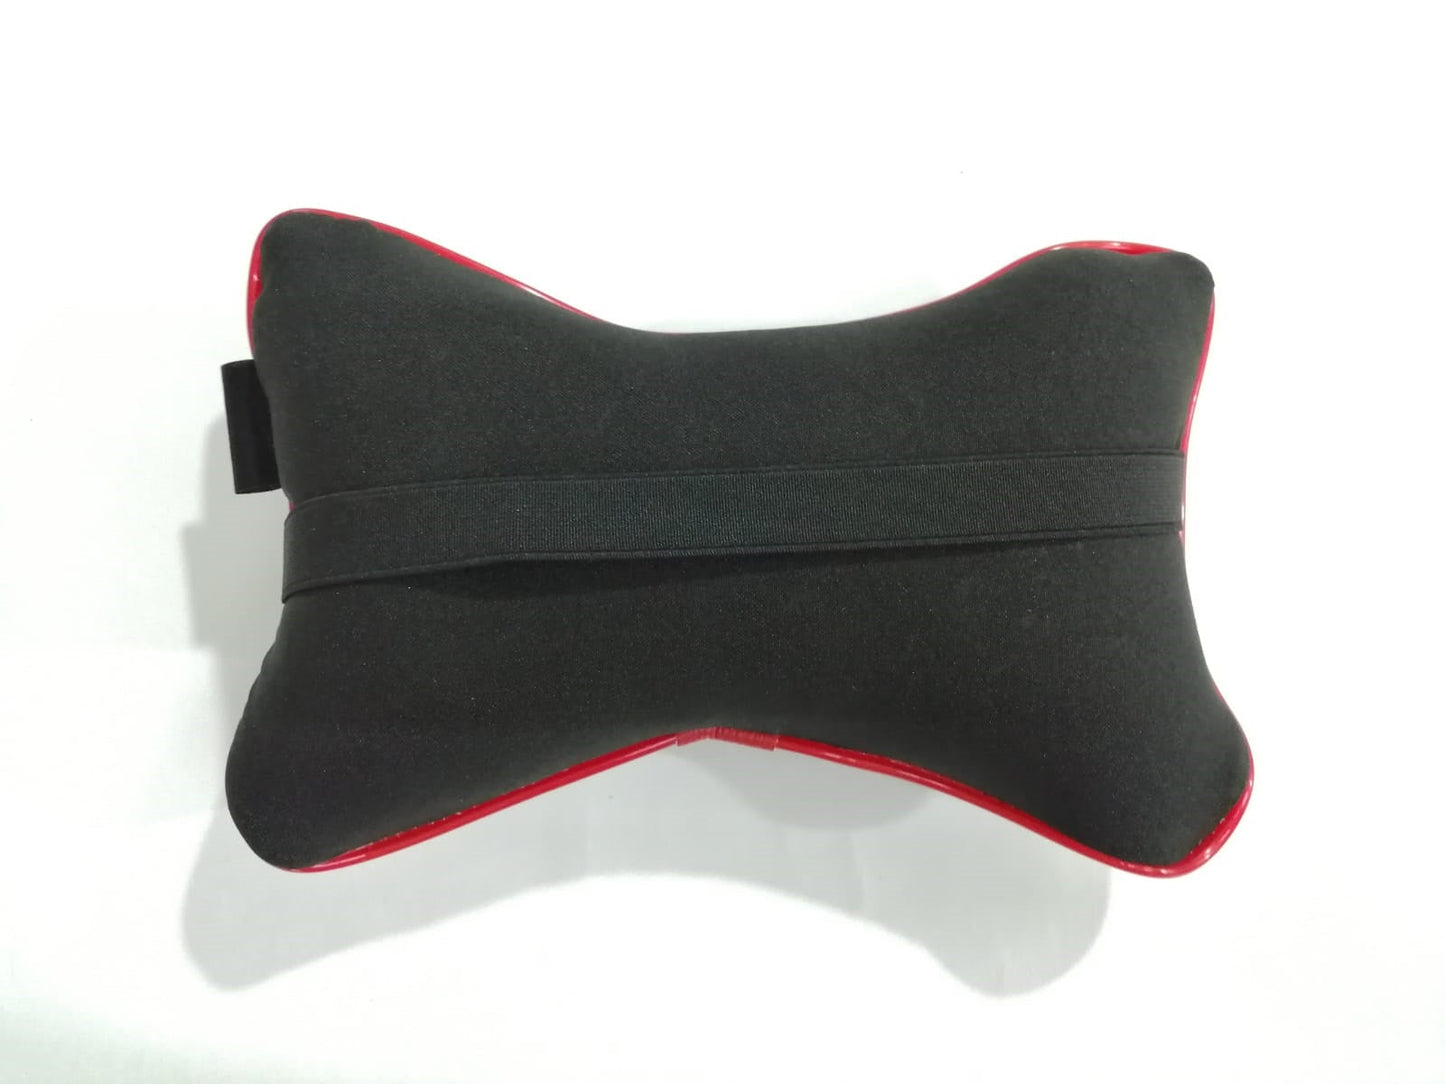 2x Honda Type-R car headrest Neck pillow Cushion